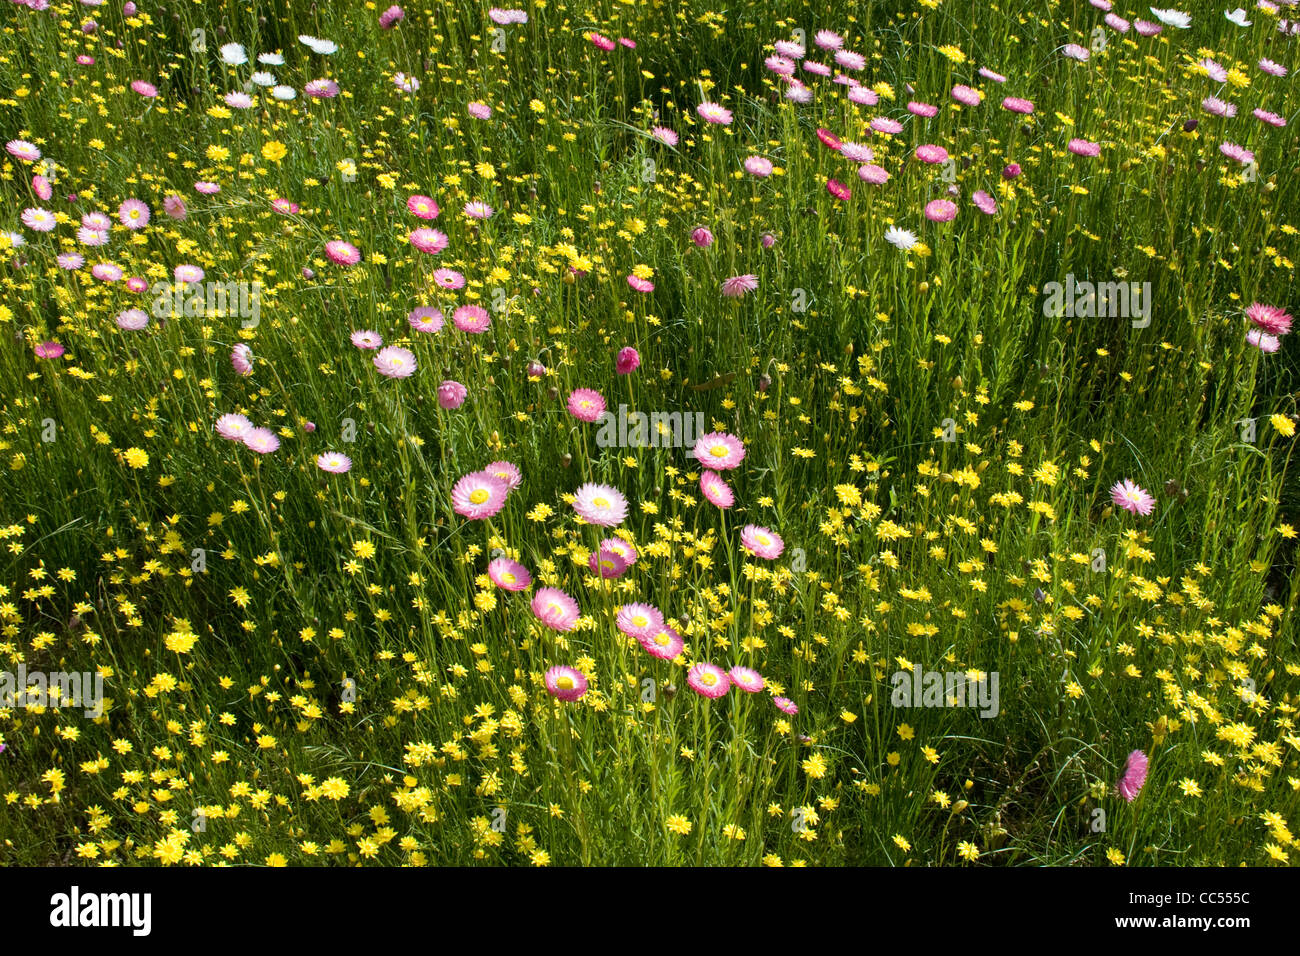 Wildflowers in Kings Park, Perth, Australia. Stock Photo